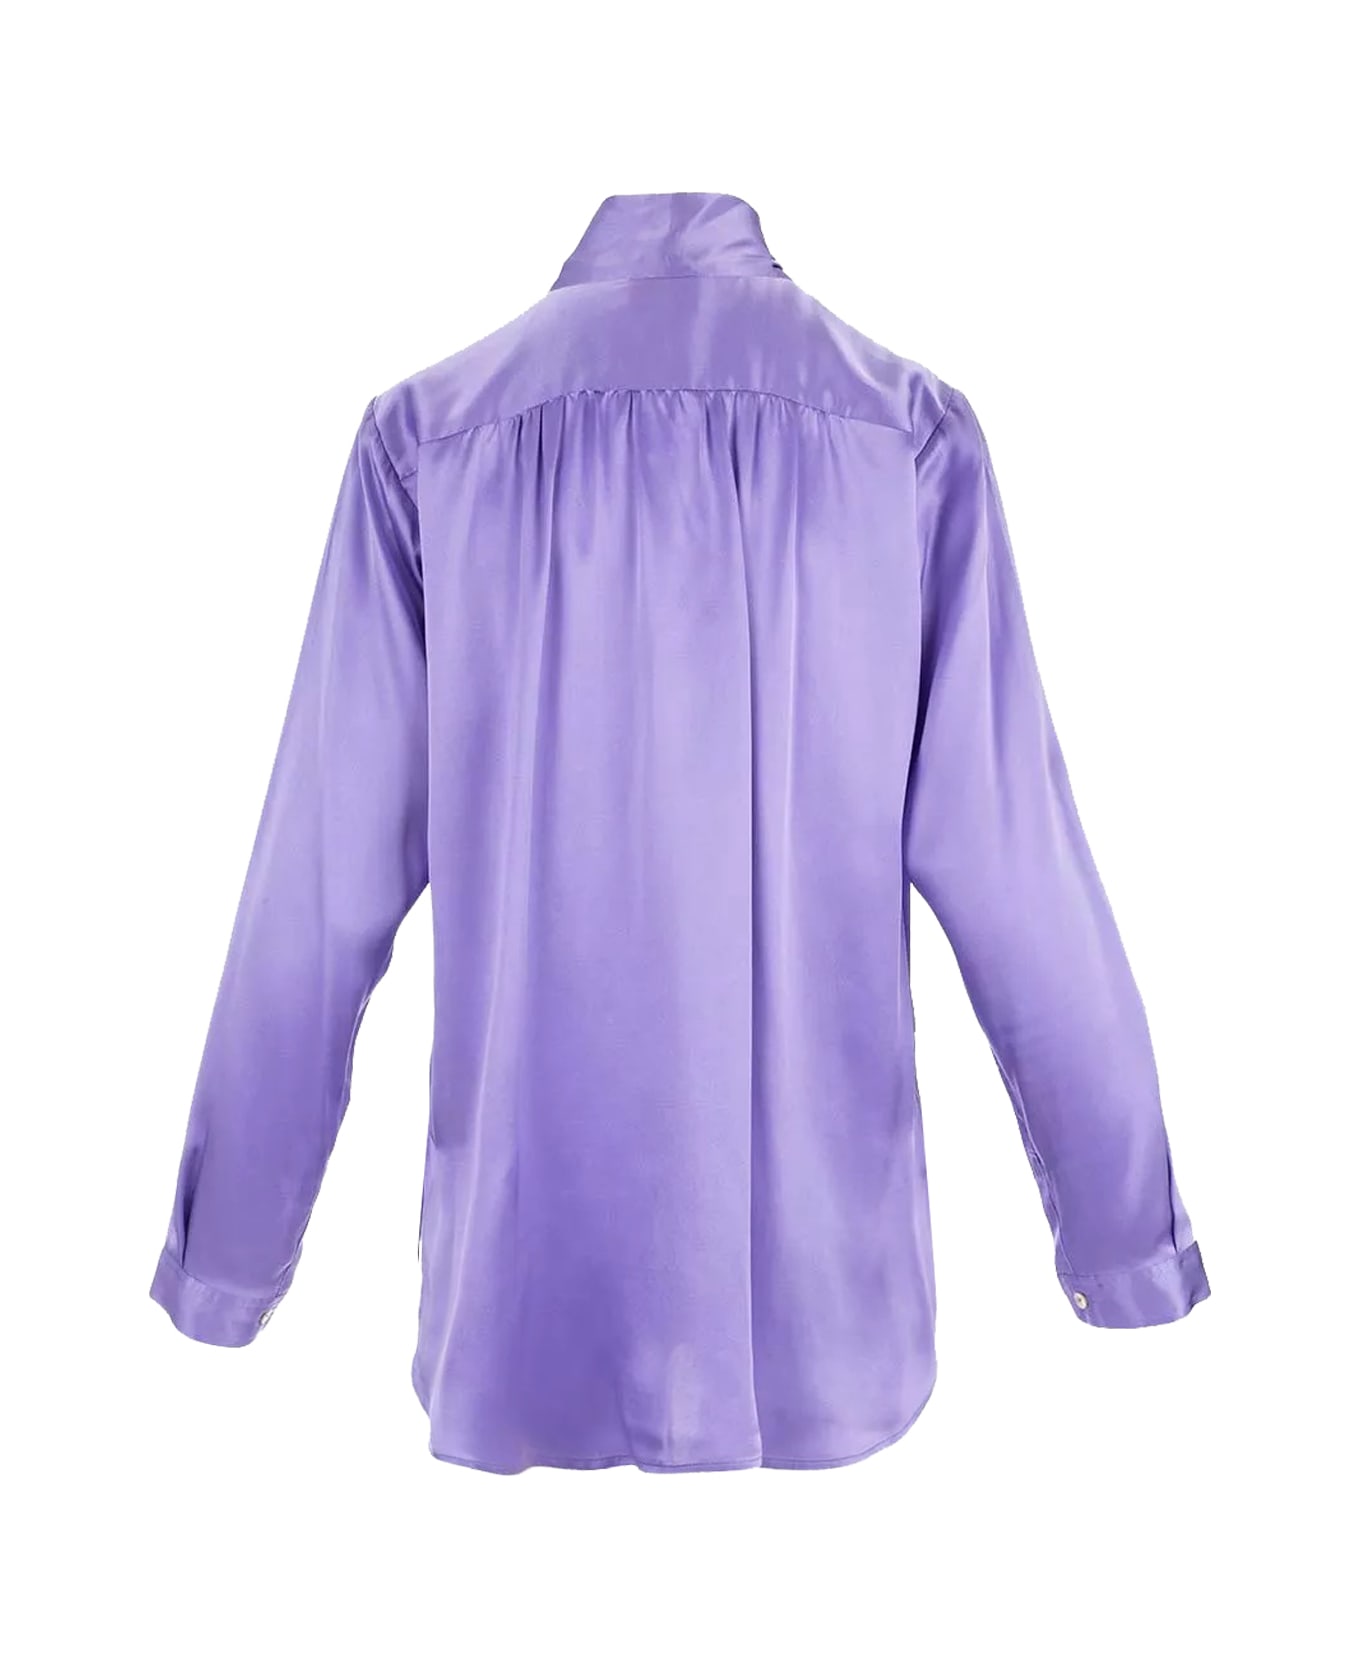 Parosh Shirt - Lilac ブラウス